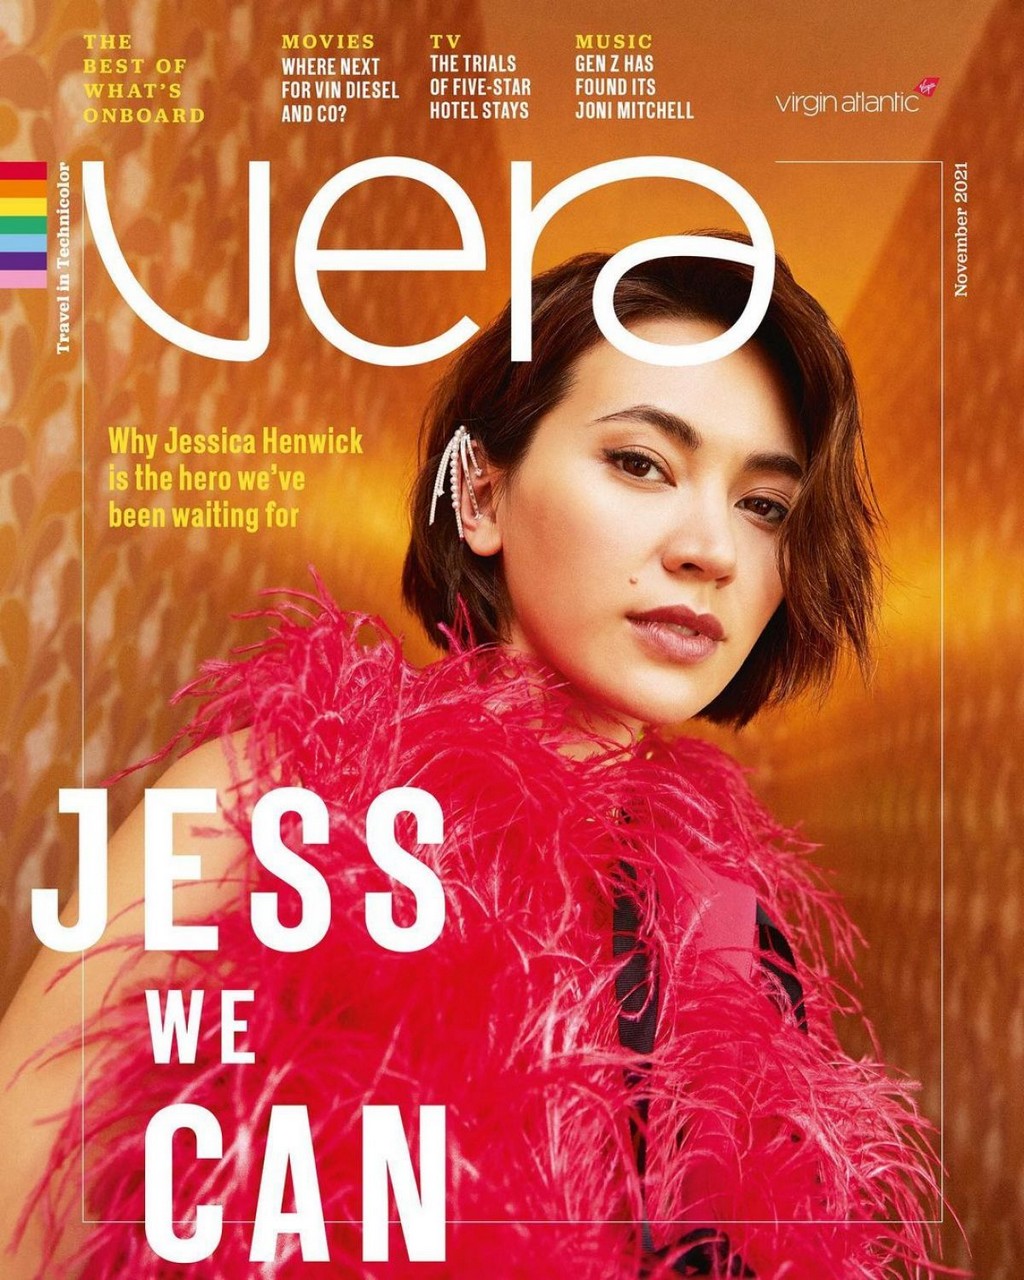 Jessica Henwick For Virgin Atlantic Magazine November